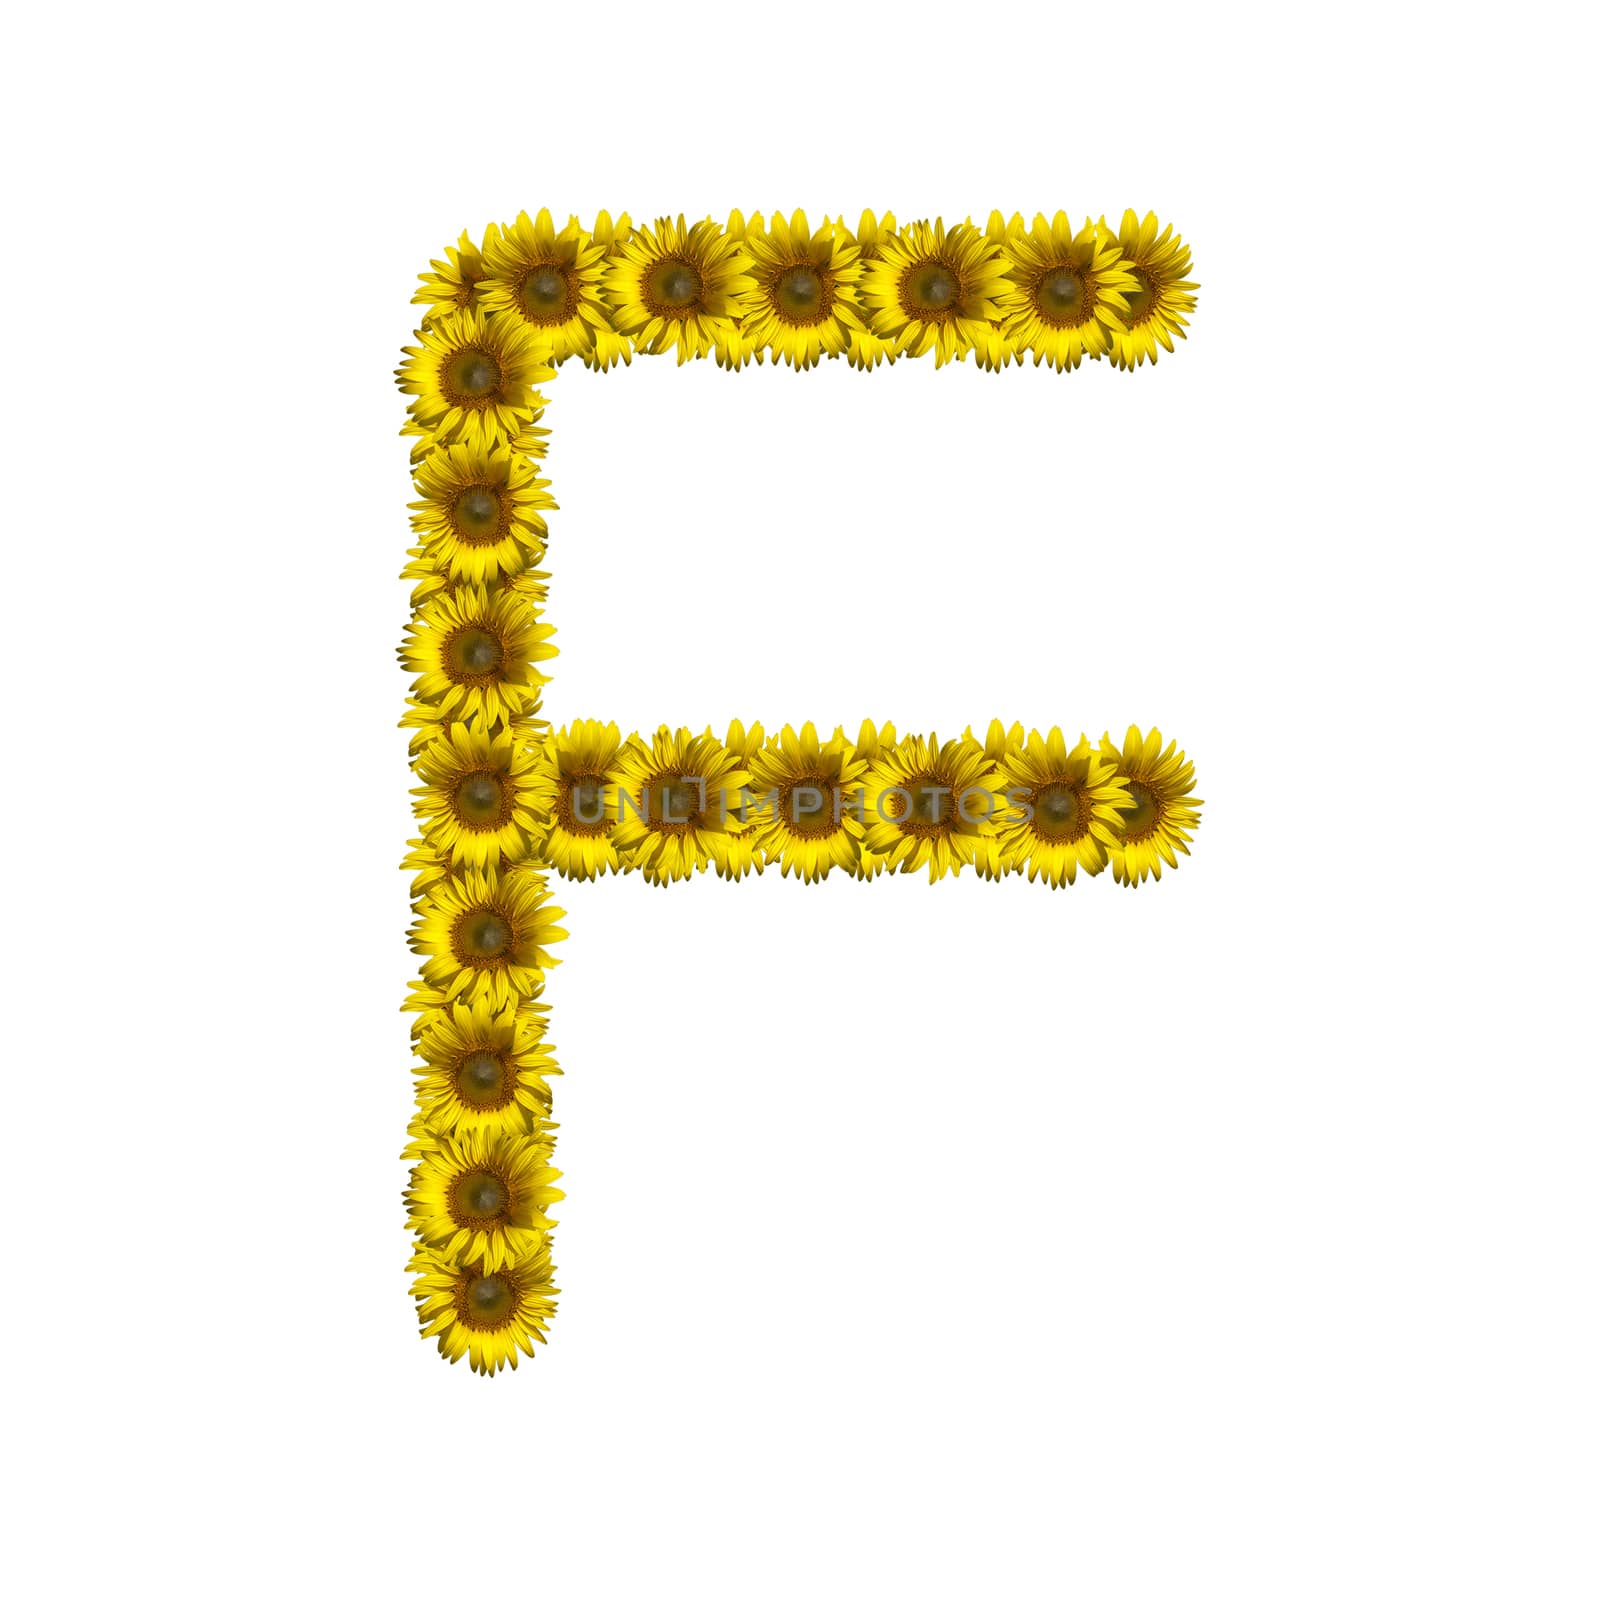 Isolated sunflower alphabet F by Exsodus